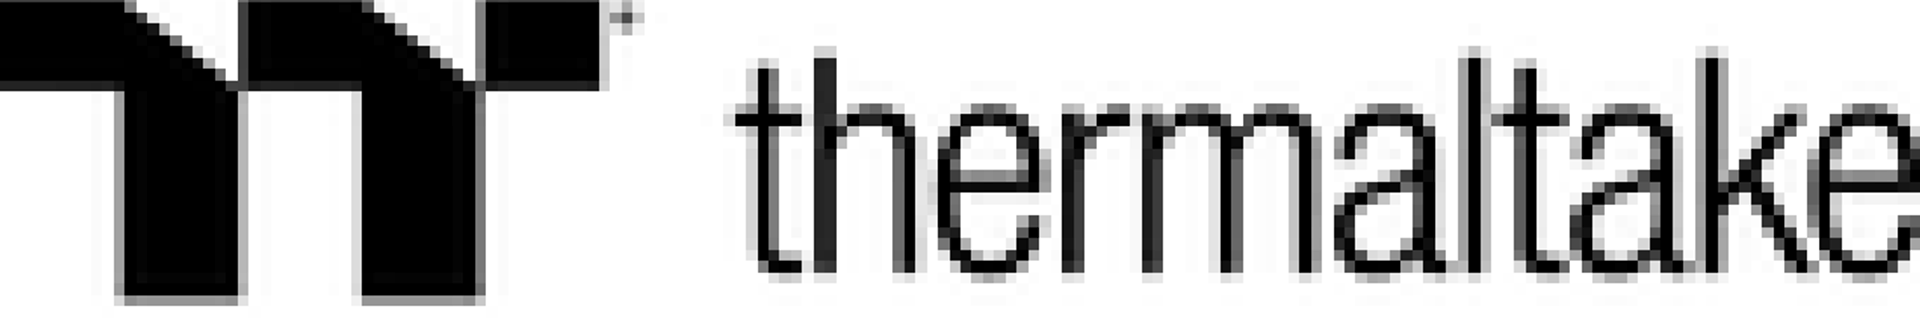 GHOST KEYBOARDS logo